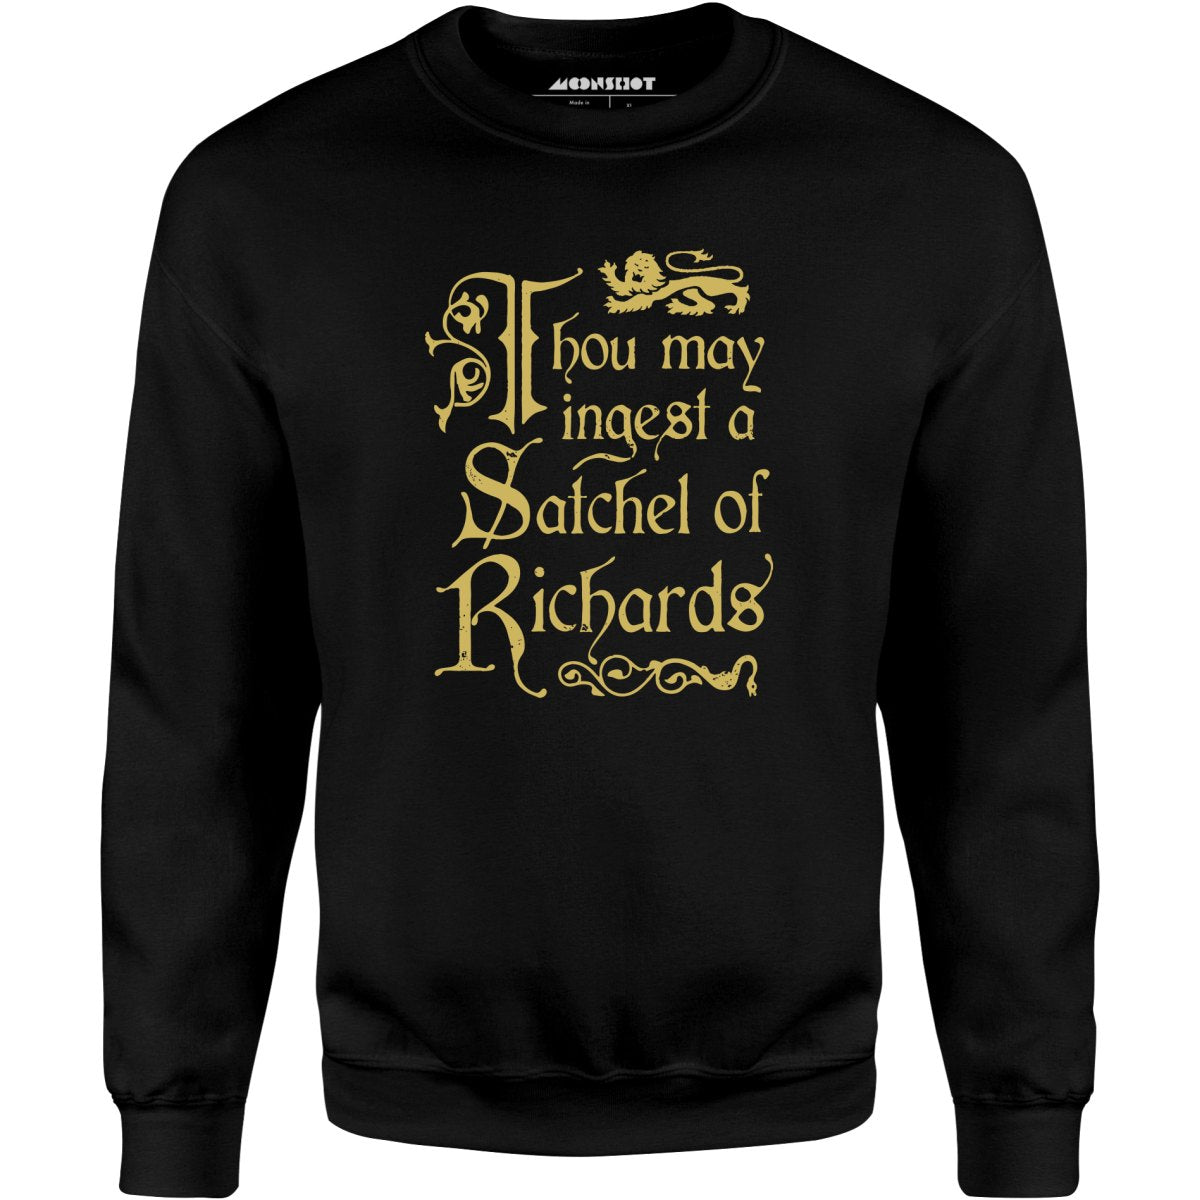 Thou May Ingest a Satchel of Richards - Unisex Sweatshirt